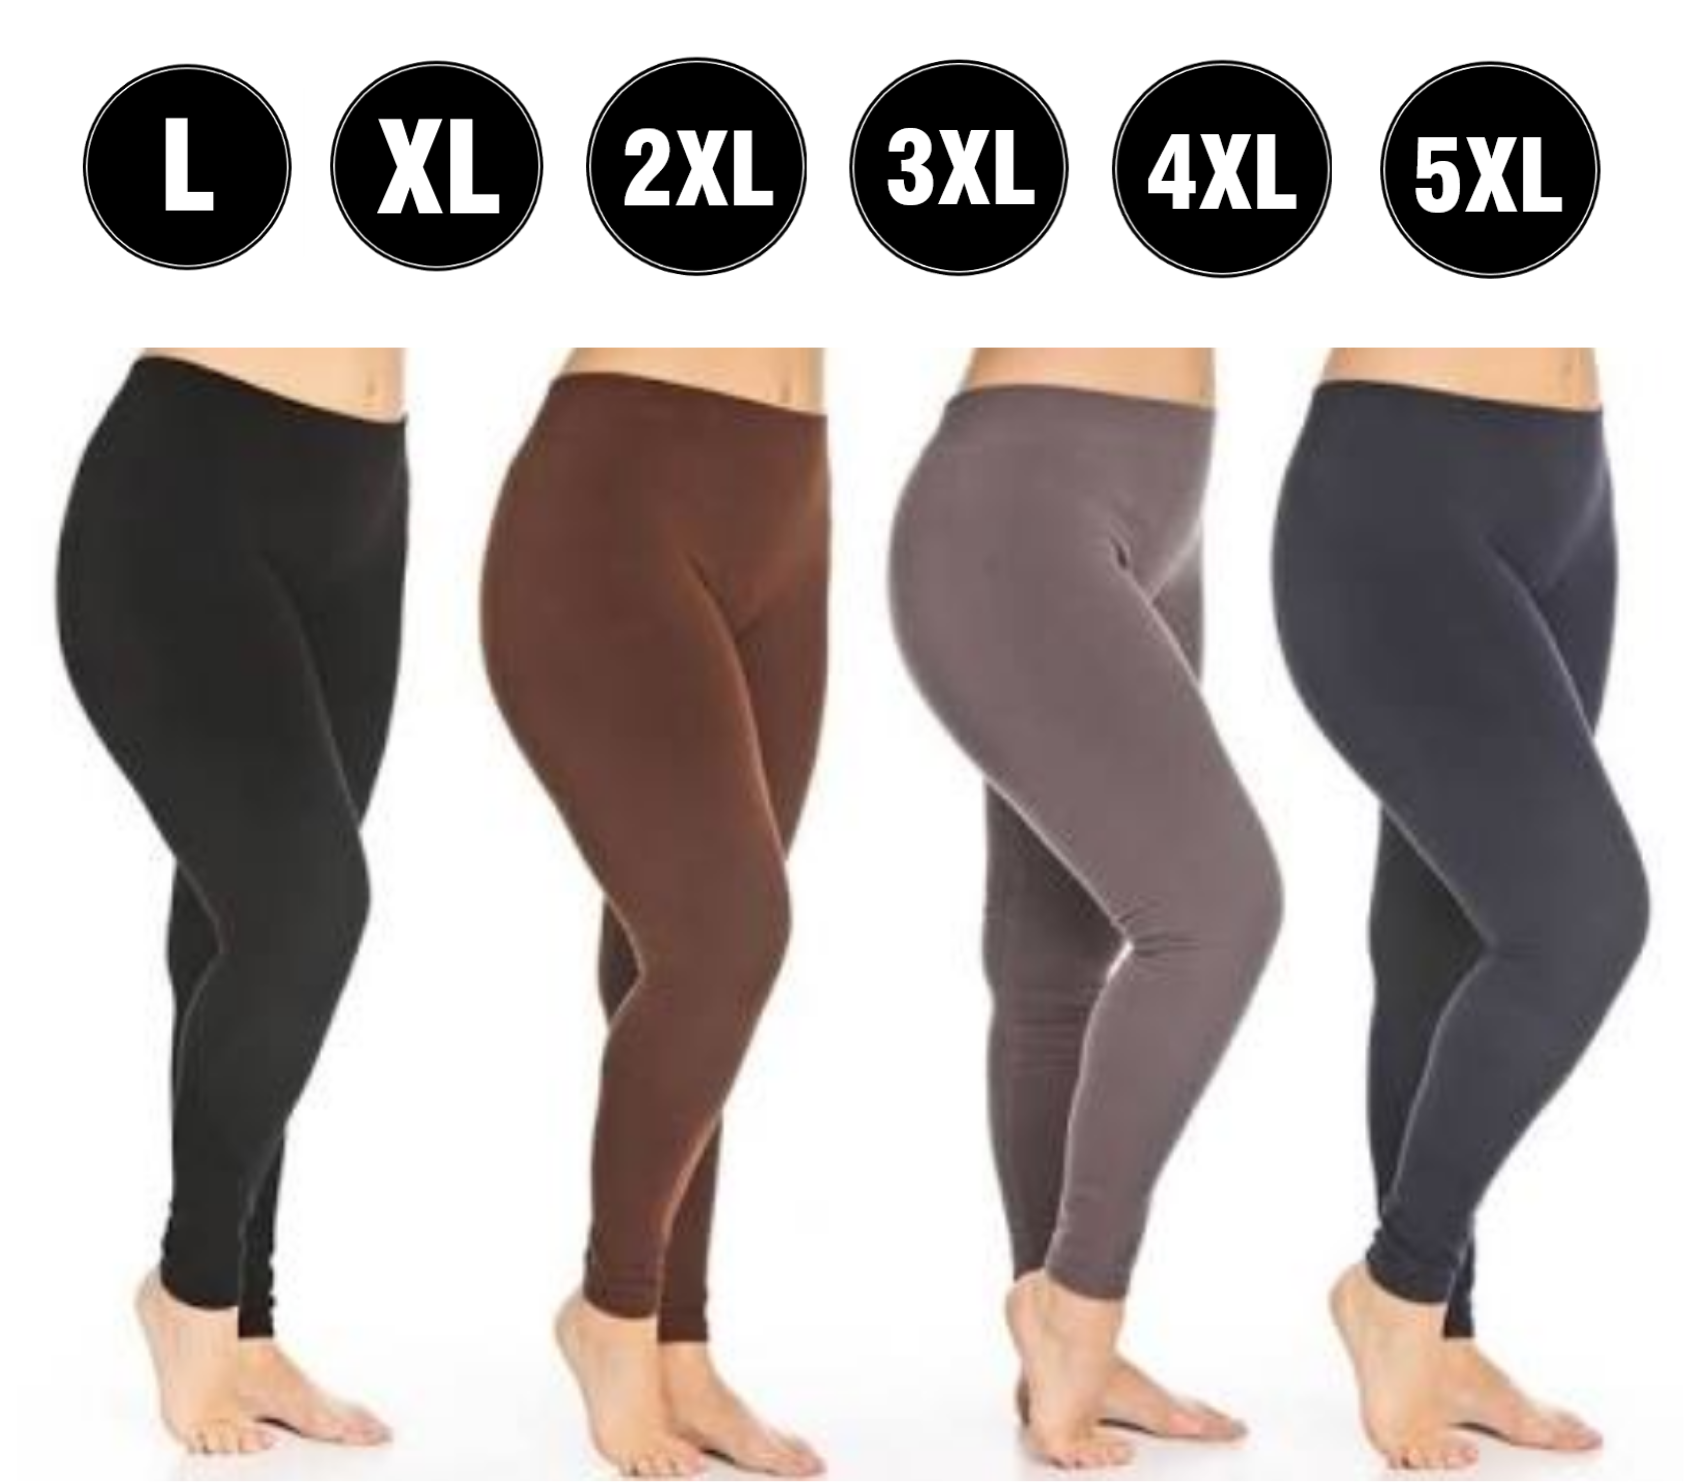 Women's adult Plus size High-waist Plain Leggings with pocket- M/L/XL/2XL/3XL/4XL/5XL